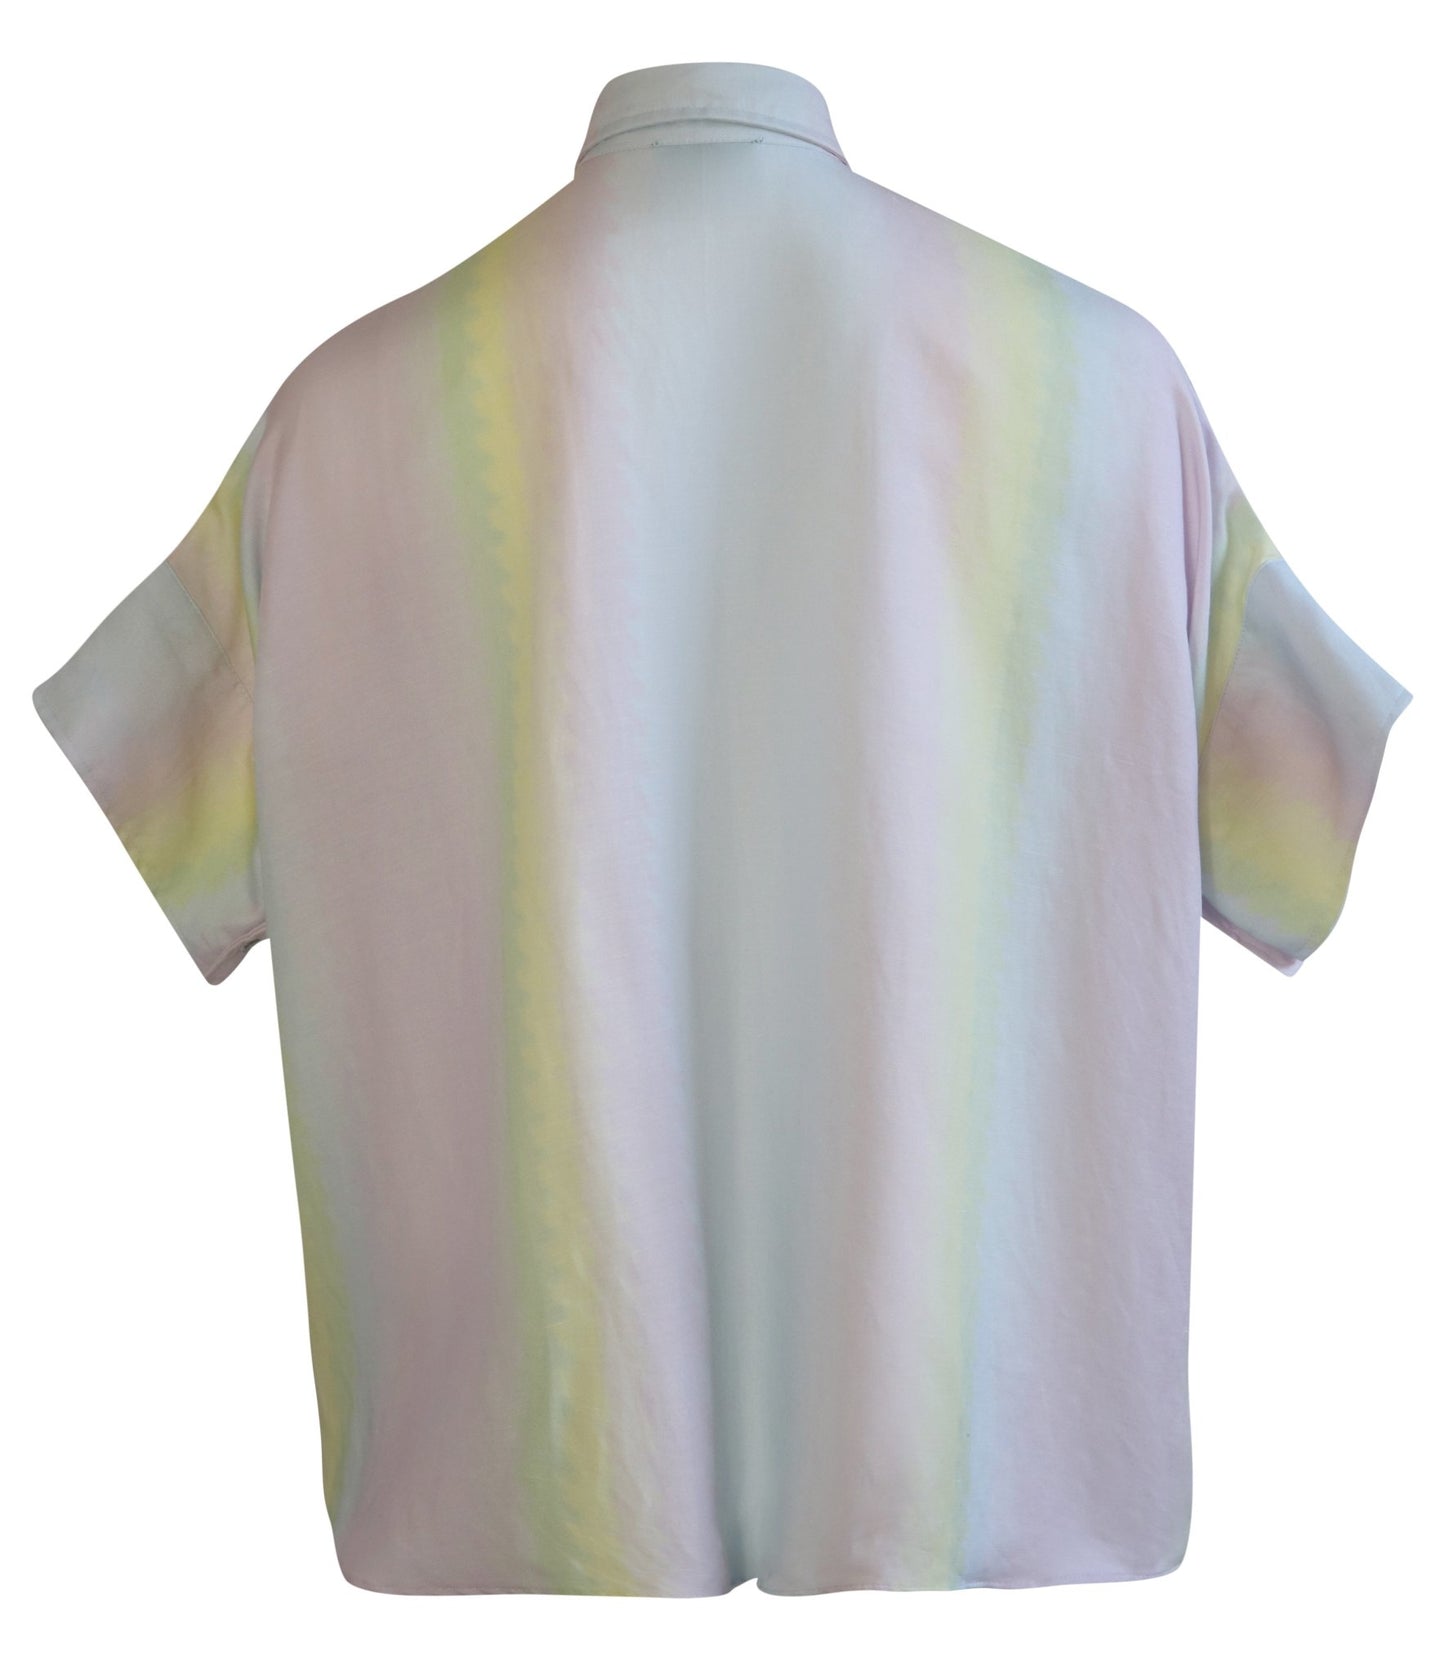 Tāhuna shirt - Pastel Rainbow - Sweepstake Winners™